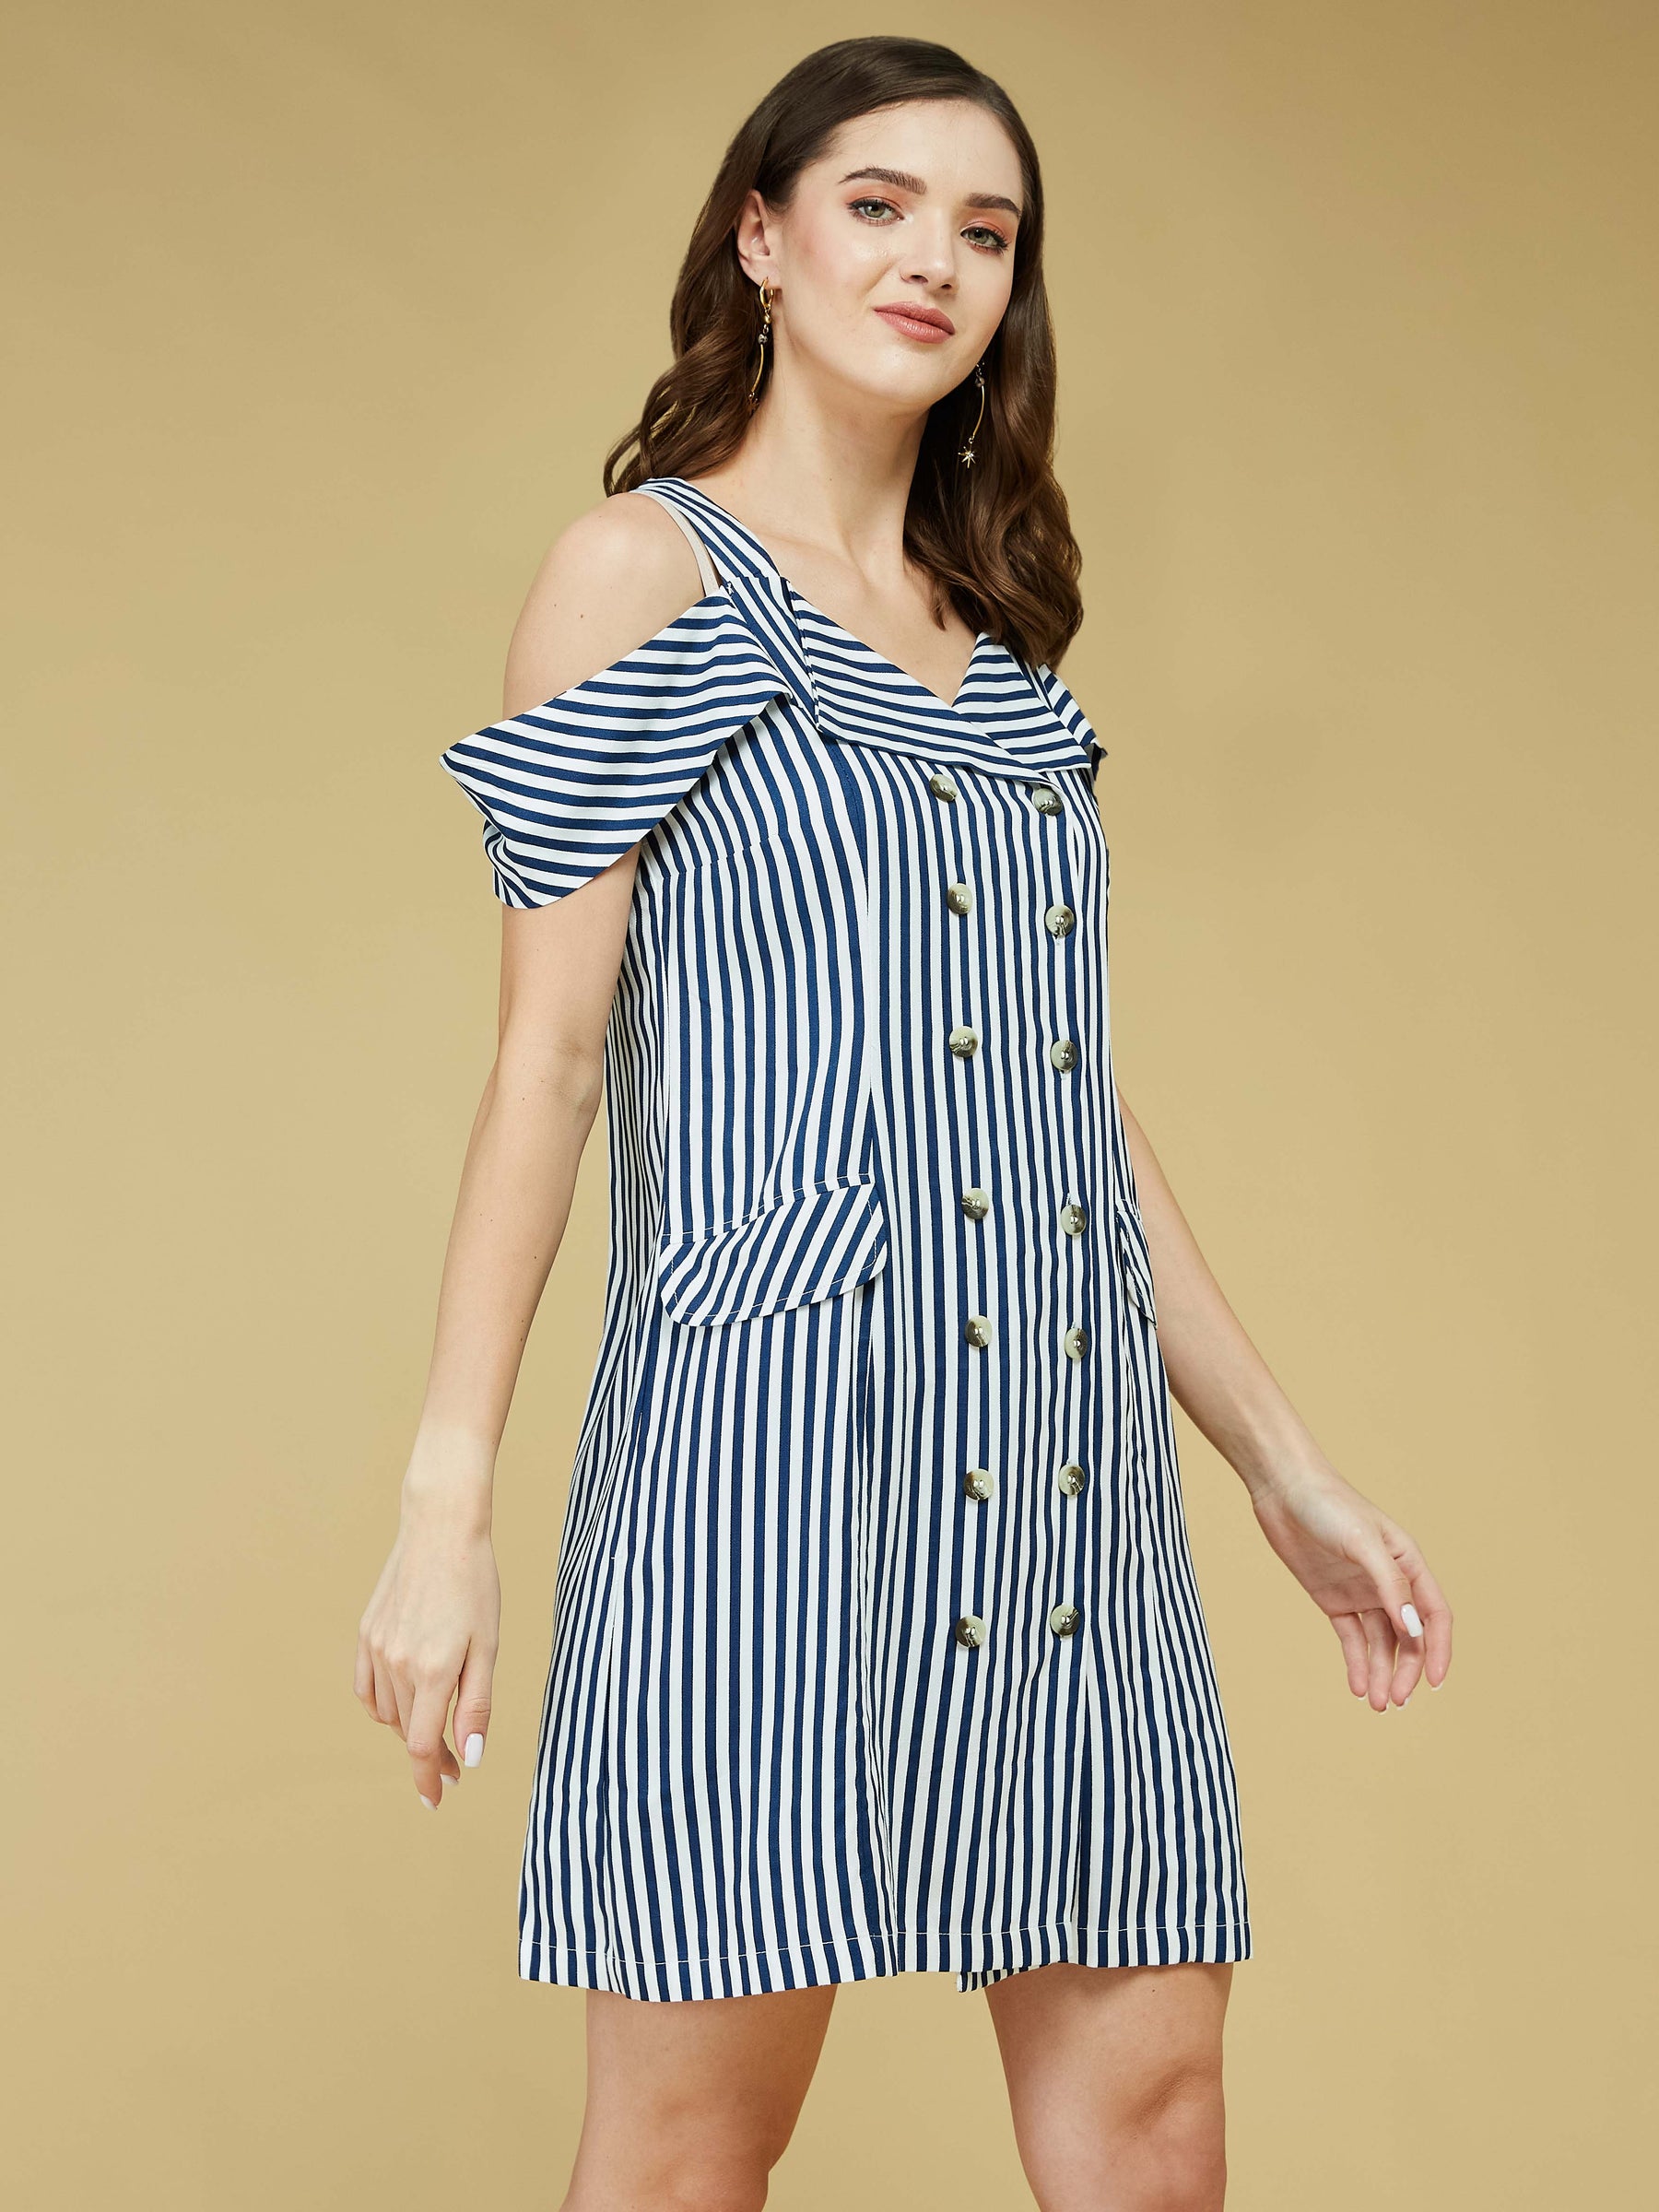 Blue Cap Sleeve Printed Rayon Dress